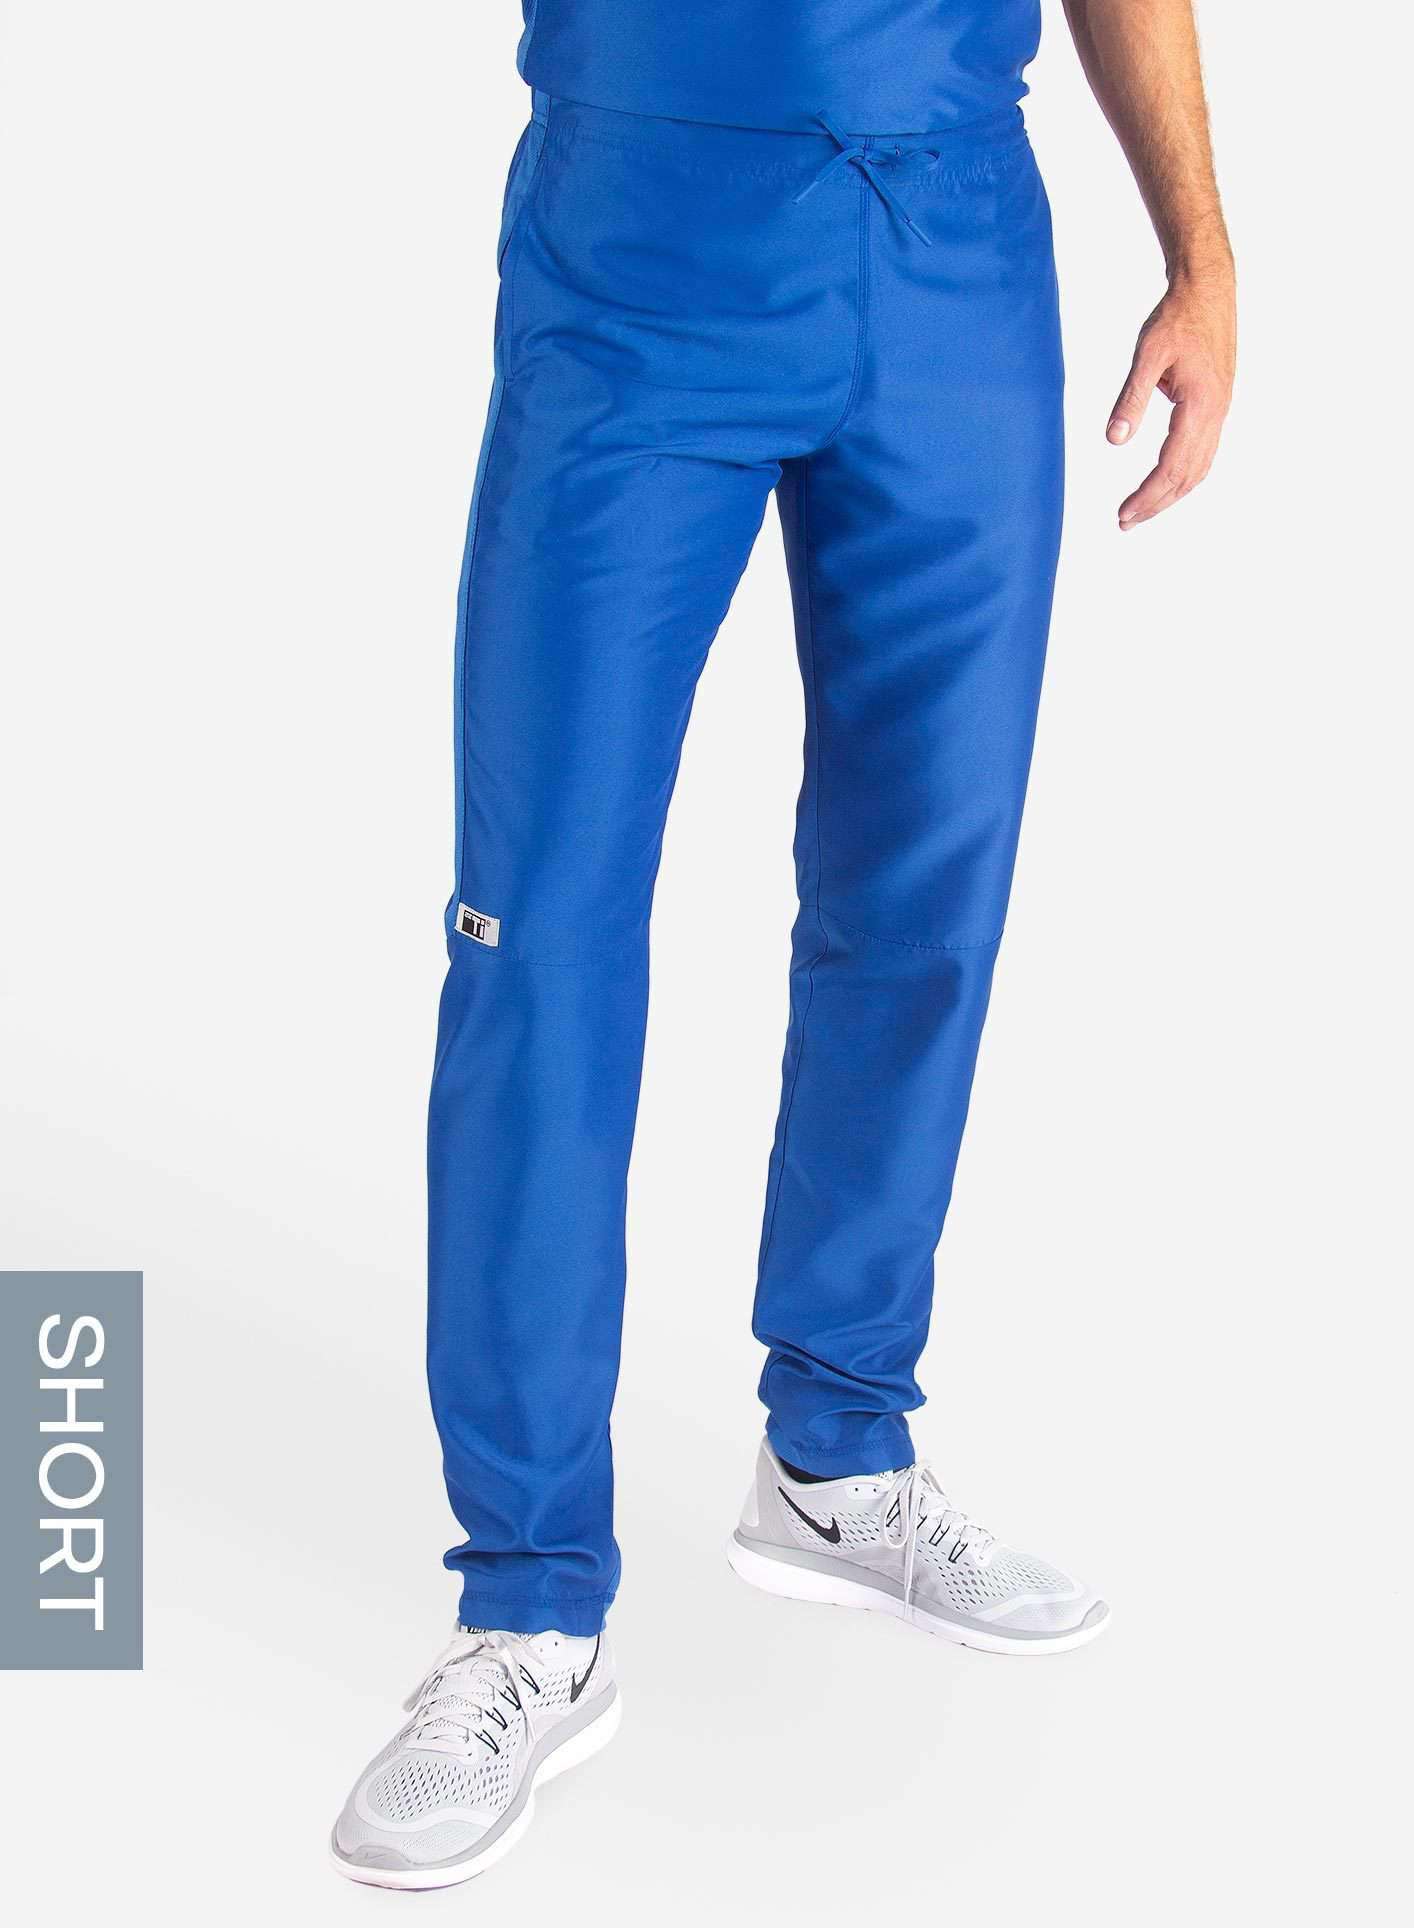 Men's Short Slim Fit Scrub Pants in royal-blue